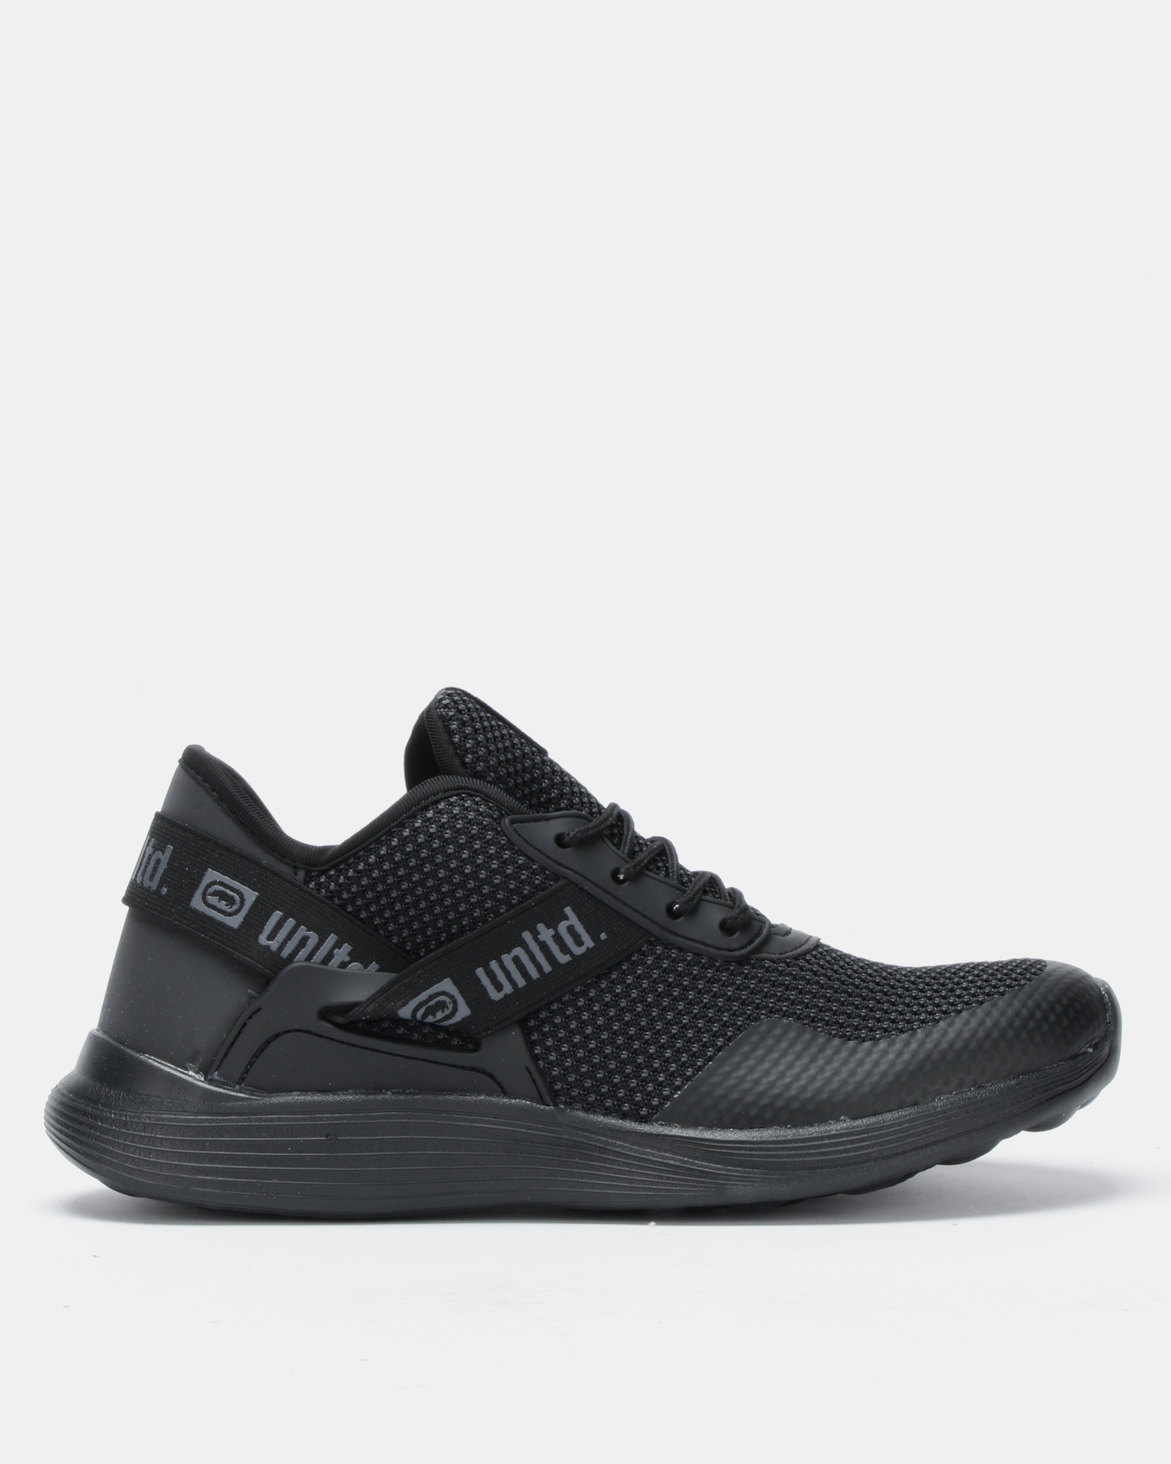 ECKÓ Unltd Sneakers Black | Zando